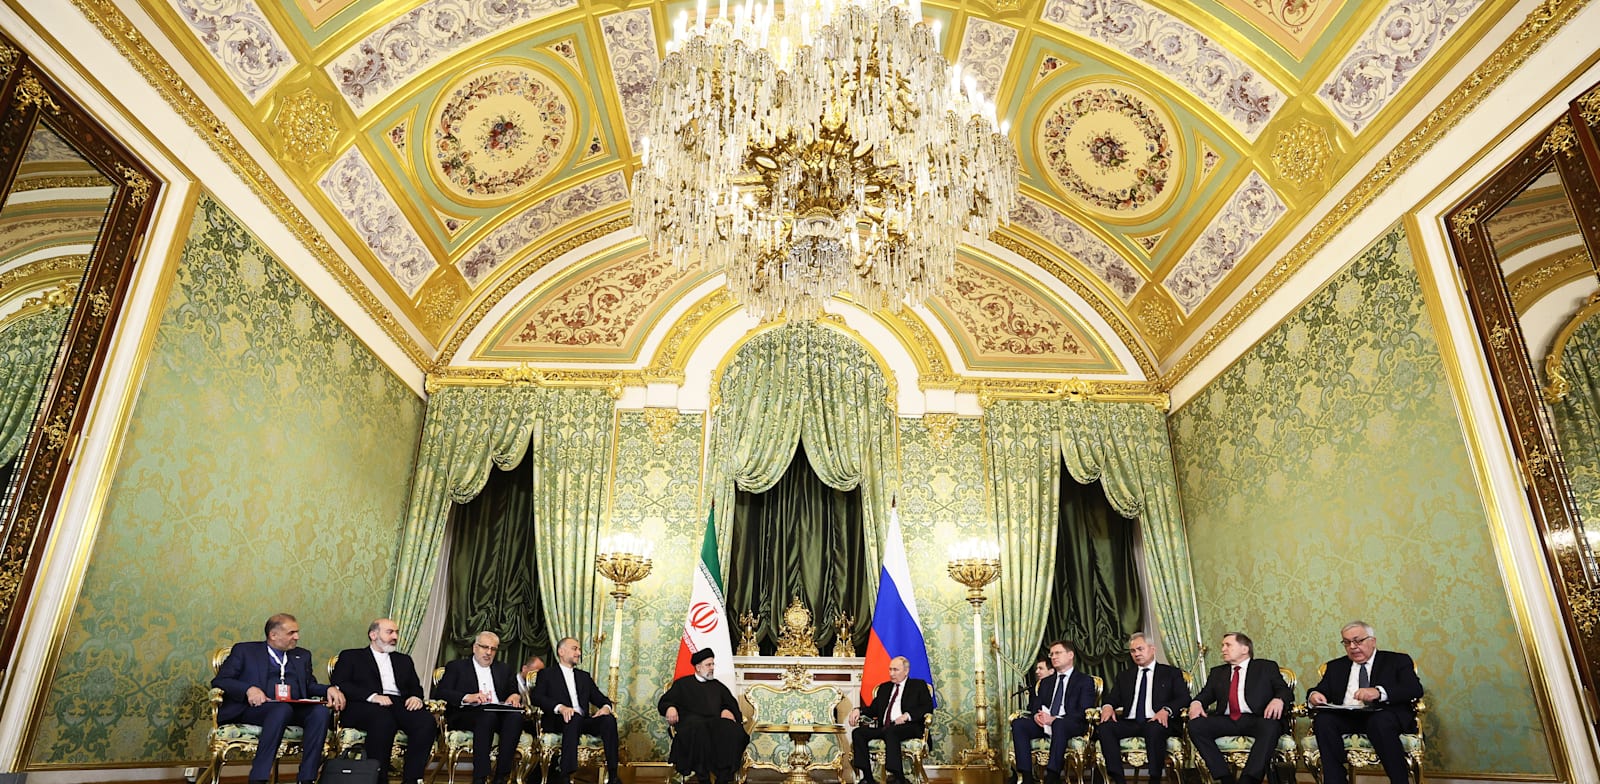 ולדימיר פוטין, נשיא רוסיה יושב בקרמלין עם אבראהים ראיסי, נשיא איראן / צילום: ap, Sergei Bobylev, Sputnik